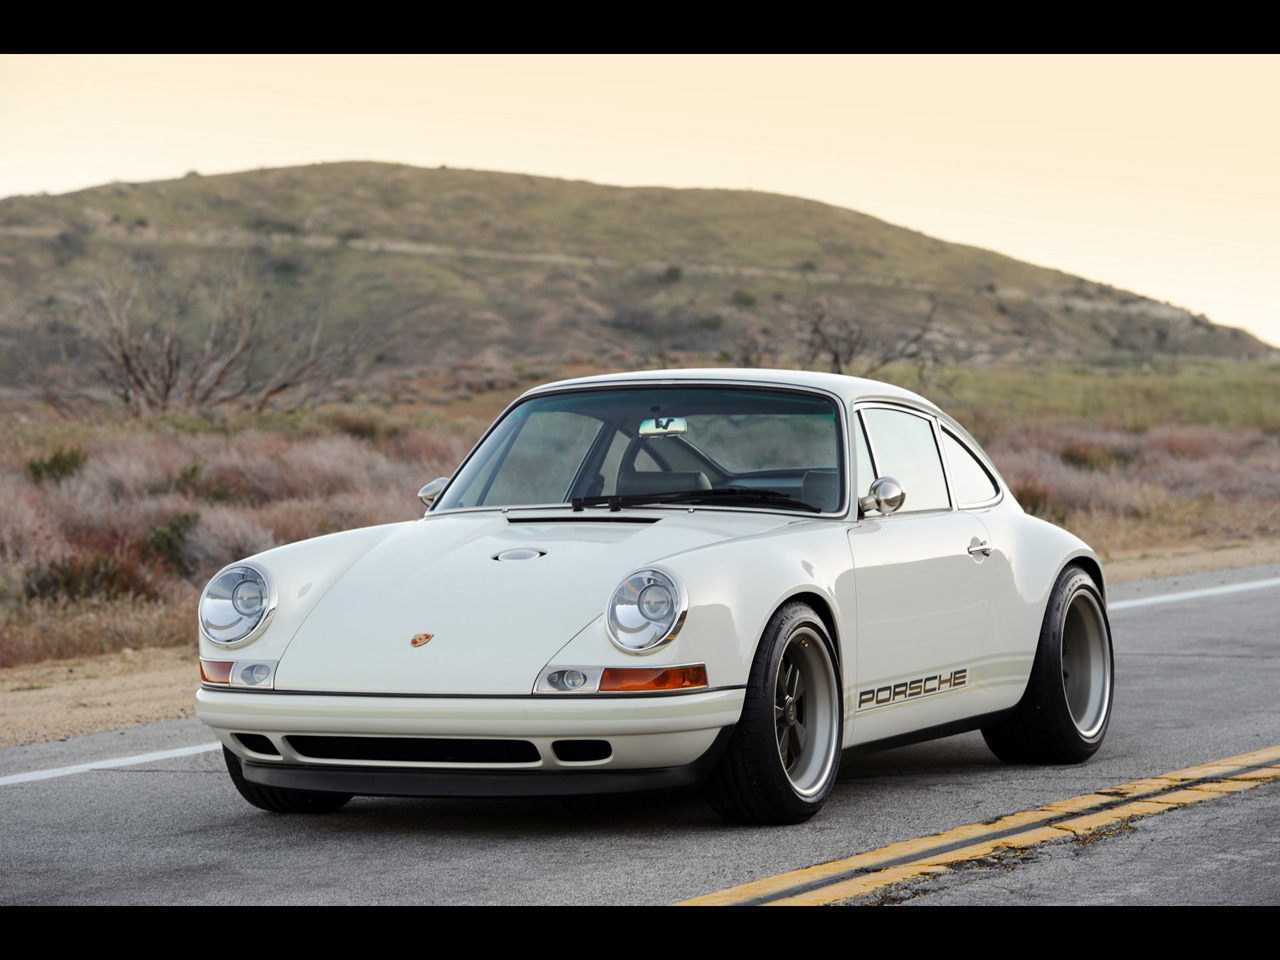 Singer Porsche White Front And Side Wallpaper